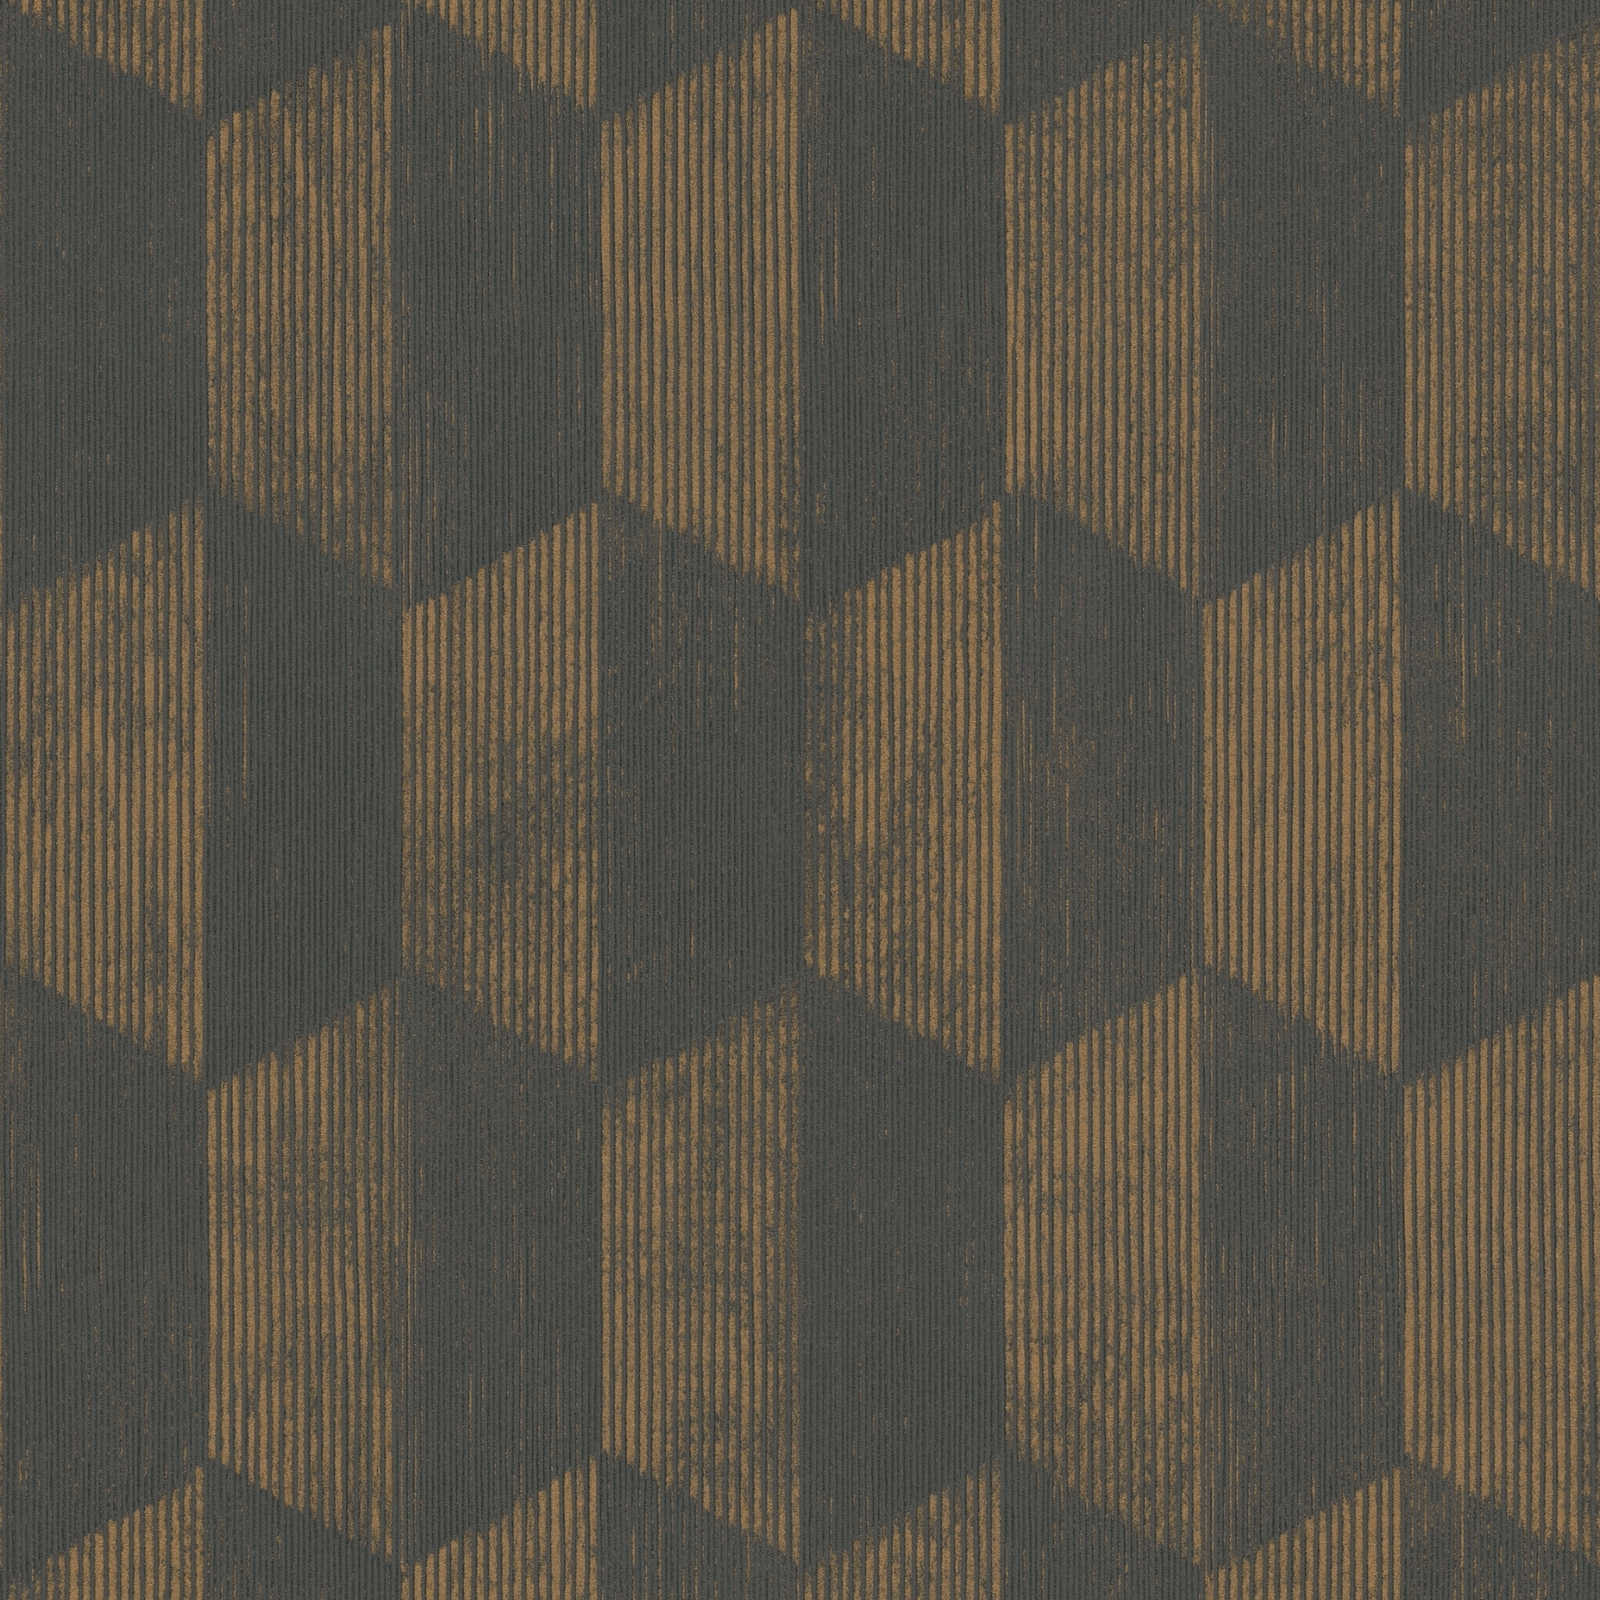         Retro wallpaper with 3D graphic design - metallic, brown
    